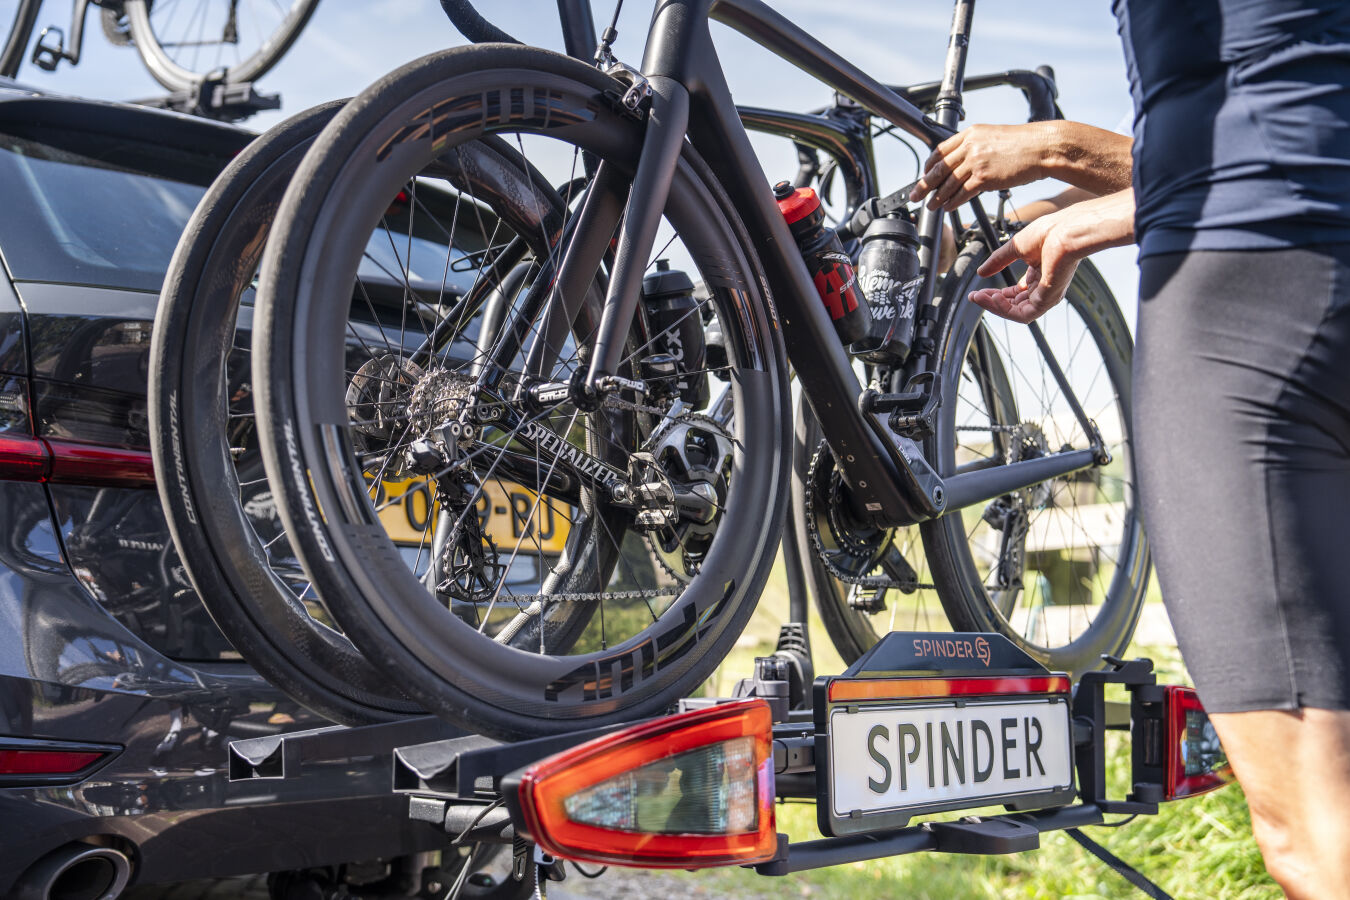 trog Optimistisch Nodig hebben Service onderdelen | Spinder bike carriers